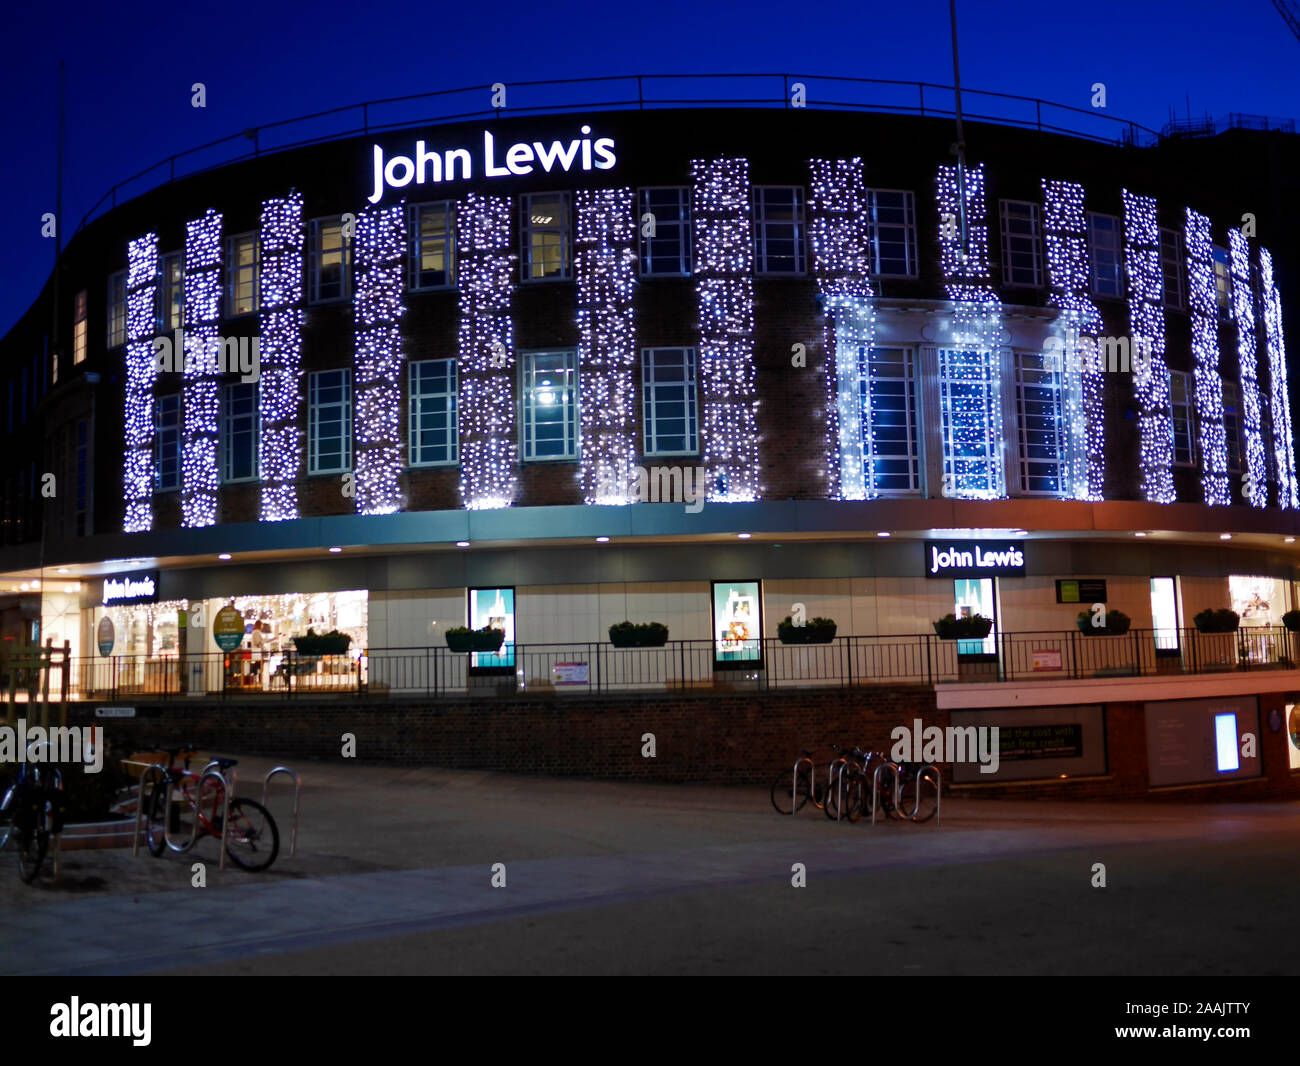 John Lewis Department Store Exterior at Dusk with Christmas Illuminations, Norwich, Norfolk, England, UK Stock Photo